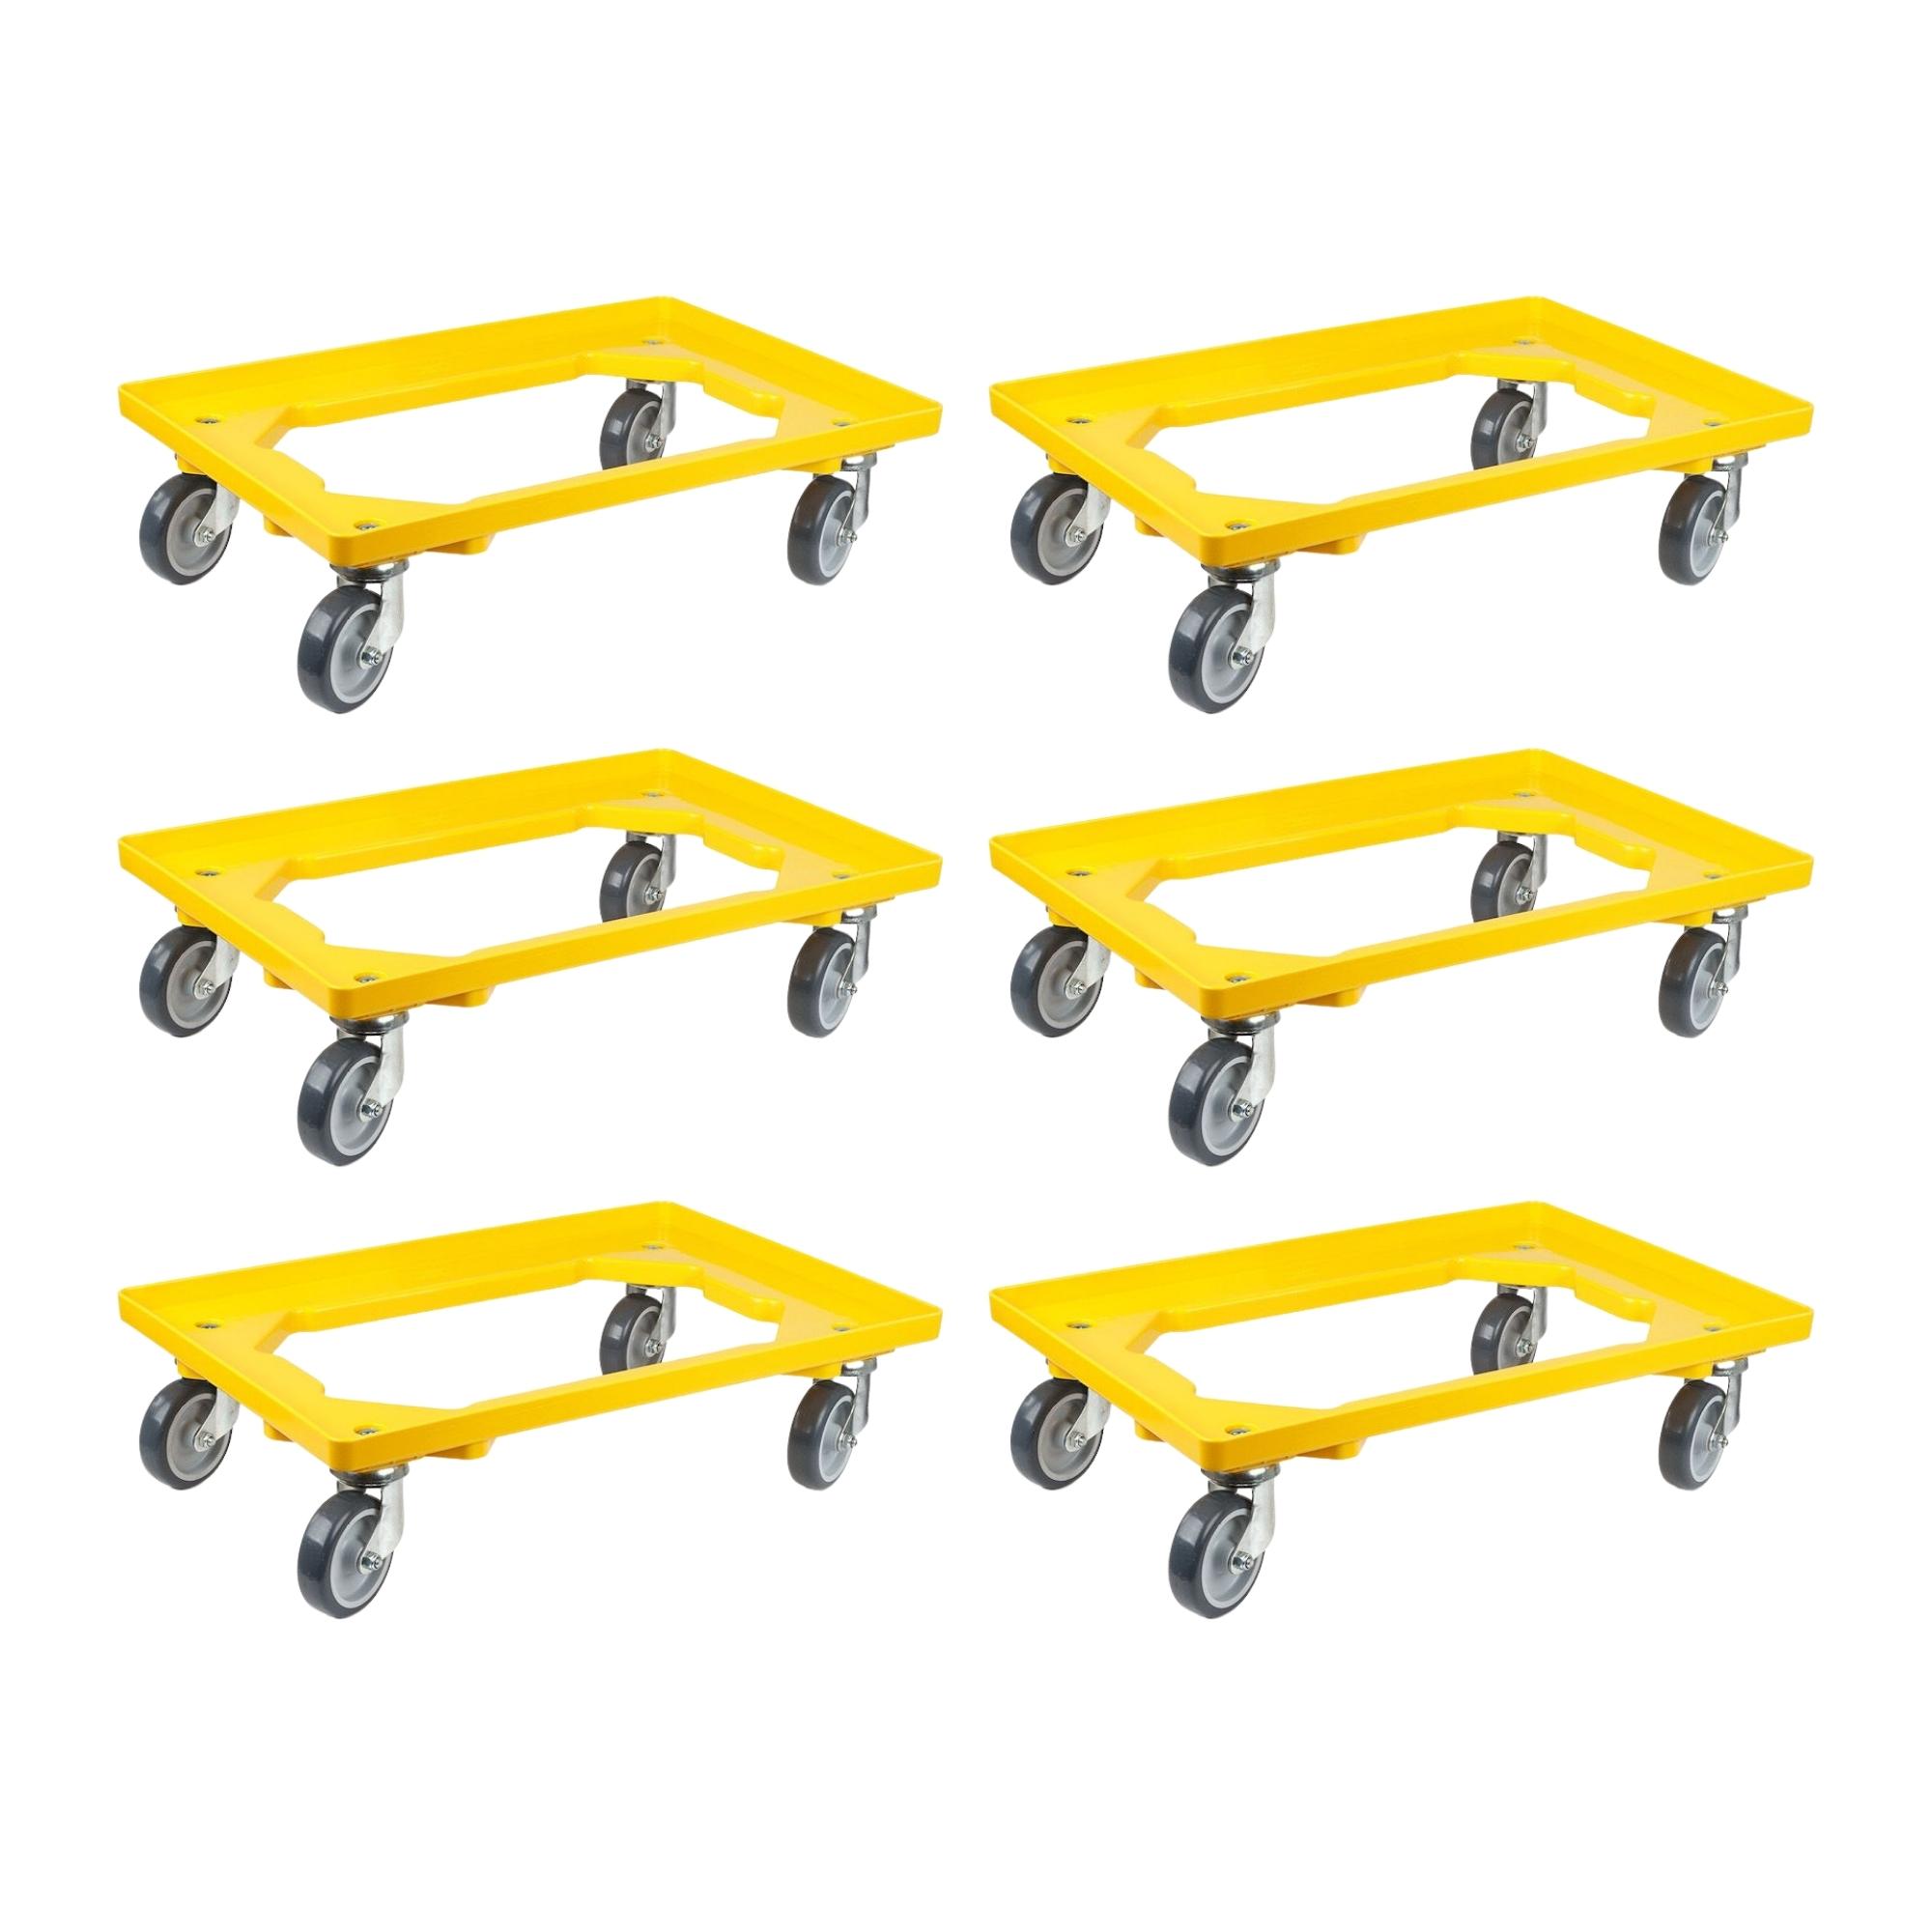 SparSet 6x Transportroller für Euroboxen 60x40cm mit Gummiräder gelb | Offenes Deck | 2 Lenkrollen & 2 Bockrollen | Traglast 300kg | Kistenroller Logistikroller Rollwagen Profi-Fahrgestell